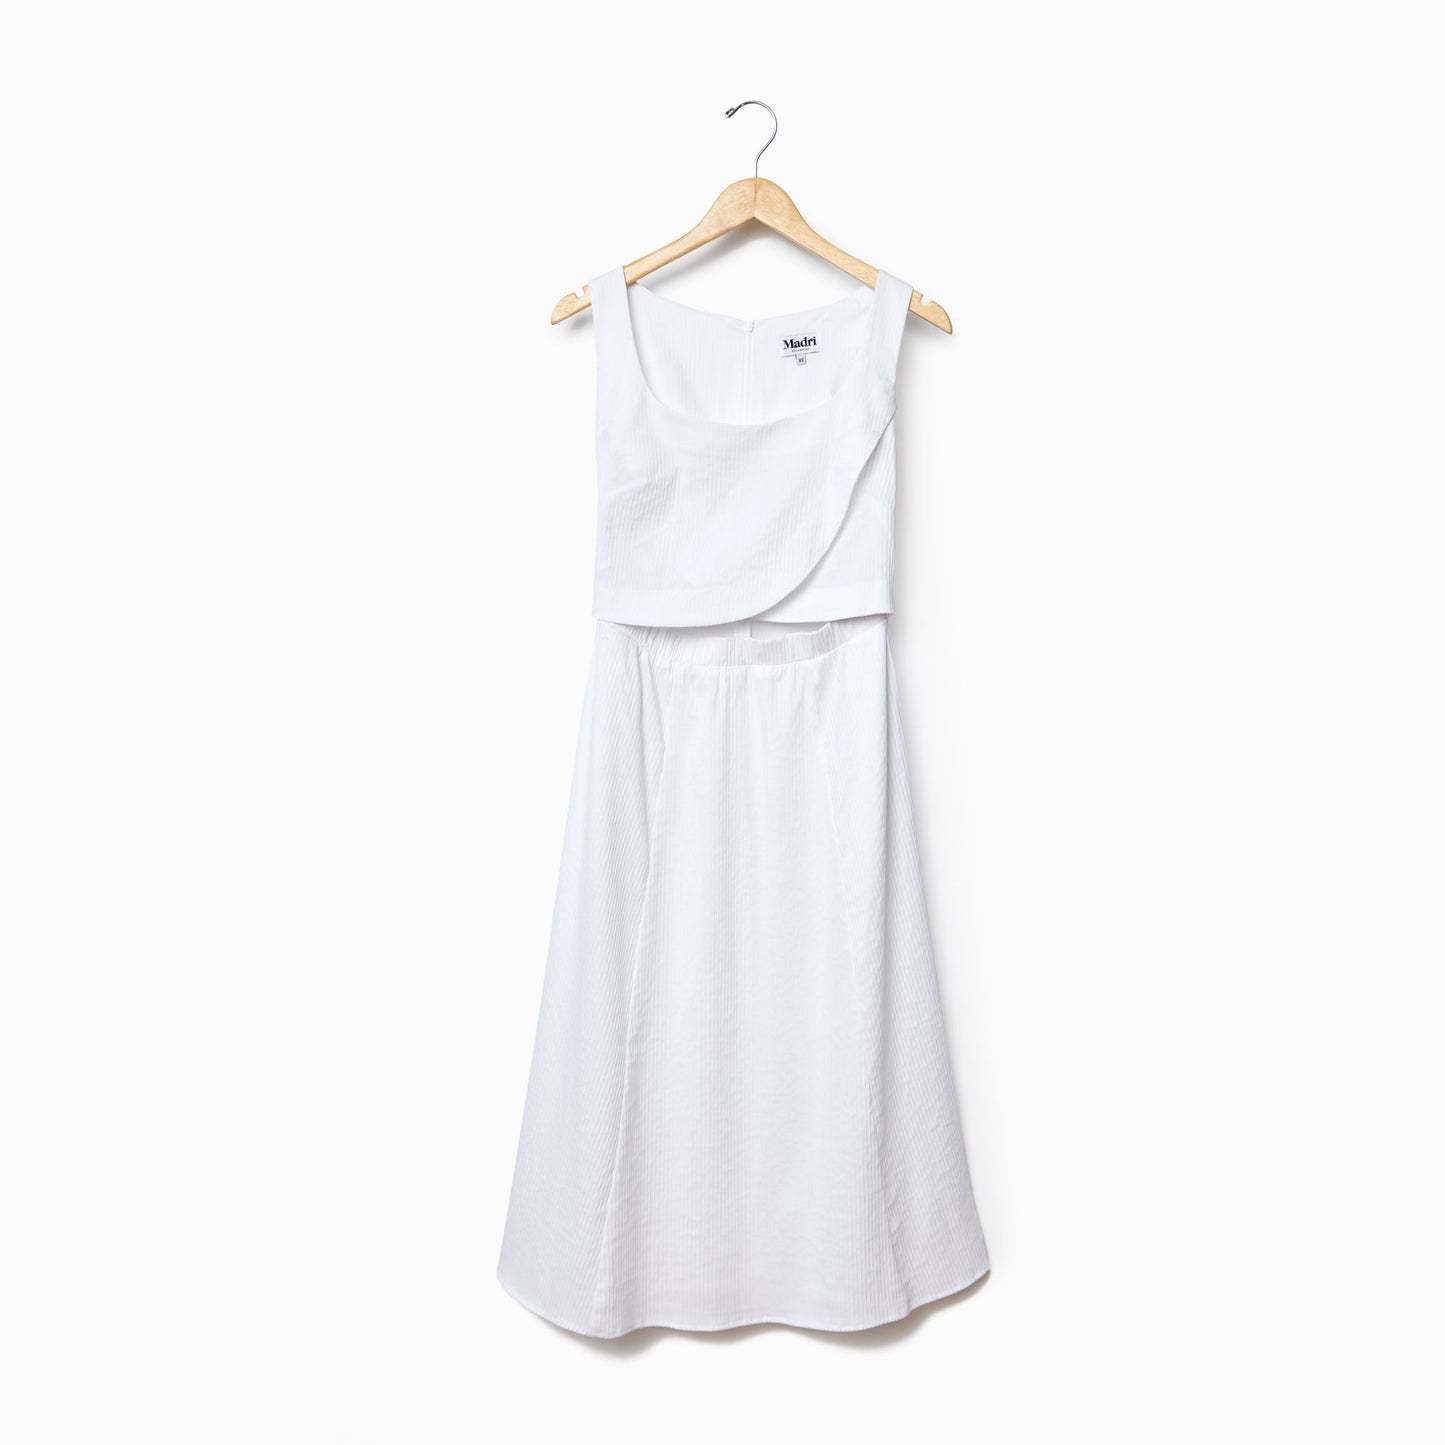 Crossover Dress in White Stripe